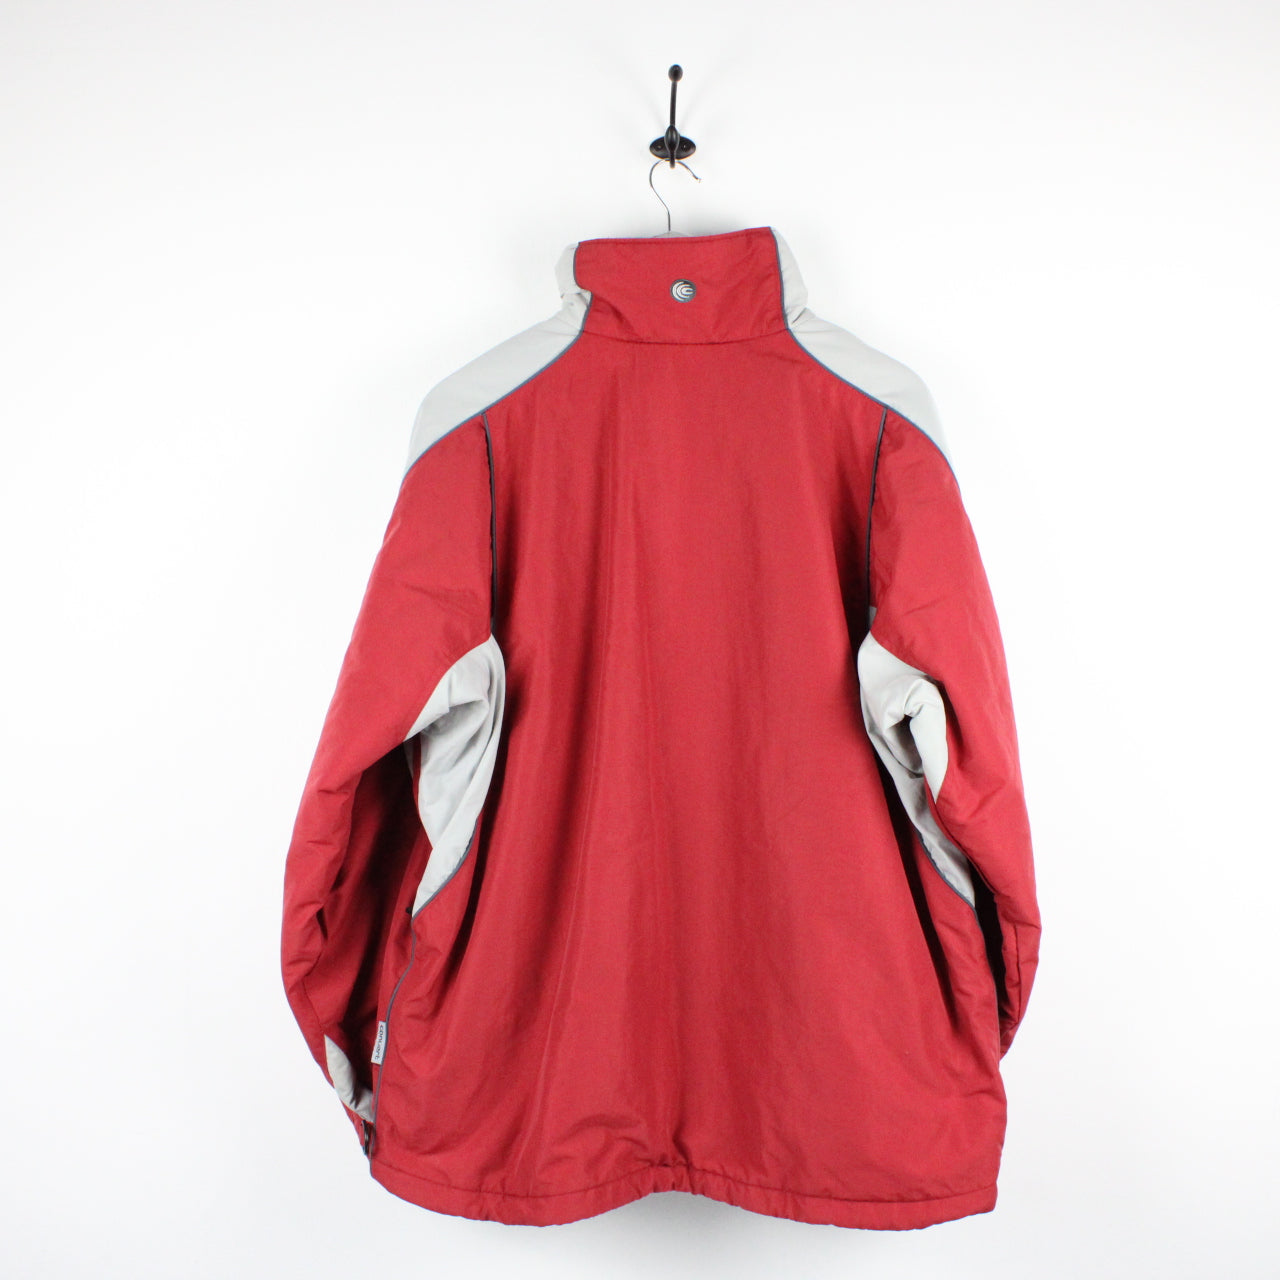 COLUMBIA Jacket Red | Large